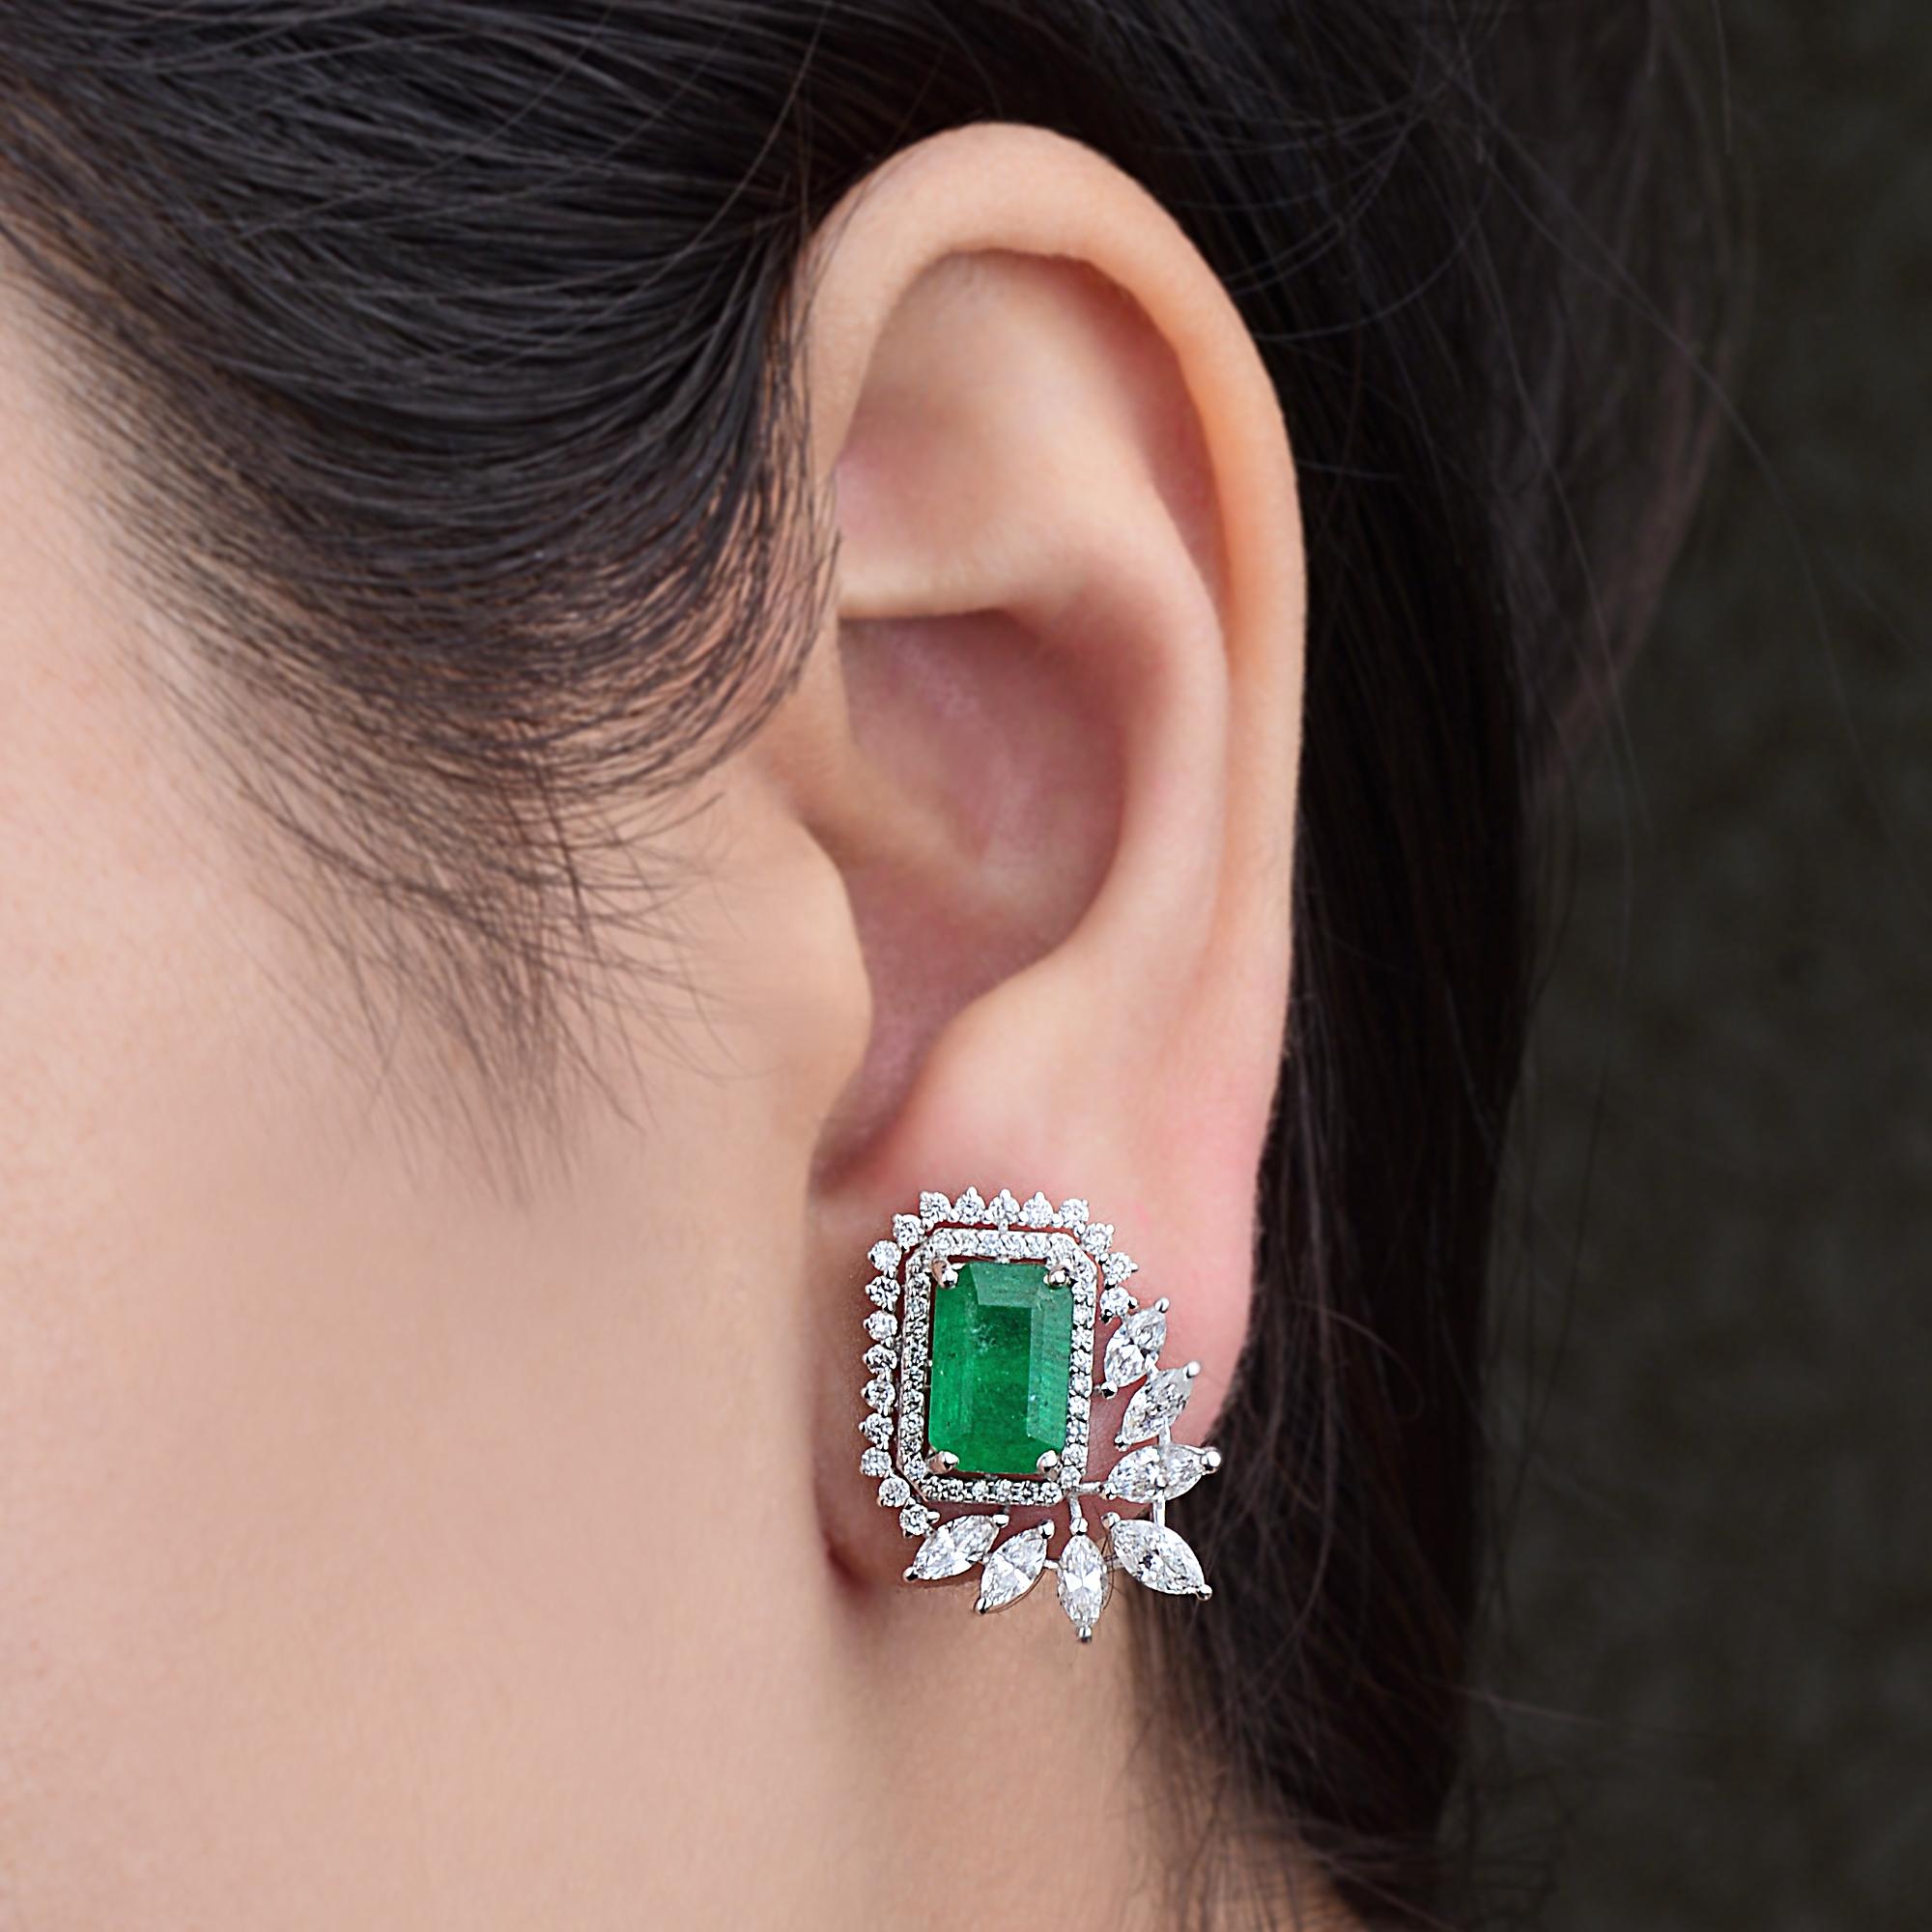 Modern Zambian Emerald Gemstone Earrings Diamond 18 Karat White Gold Handmade Jewelry For Sale